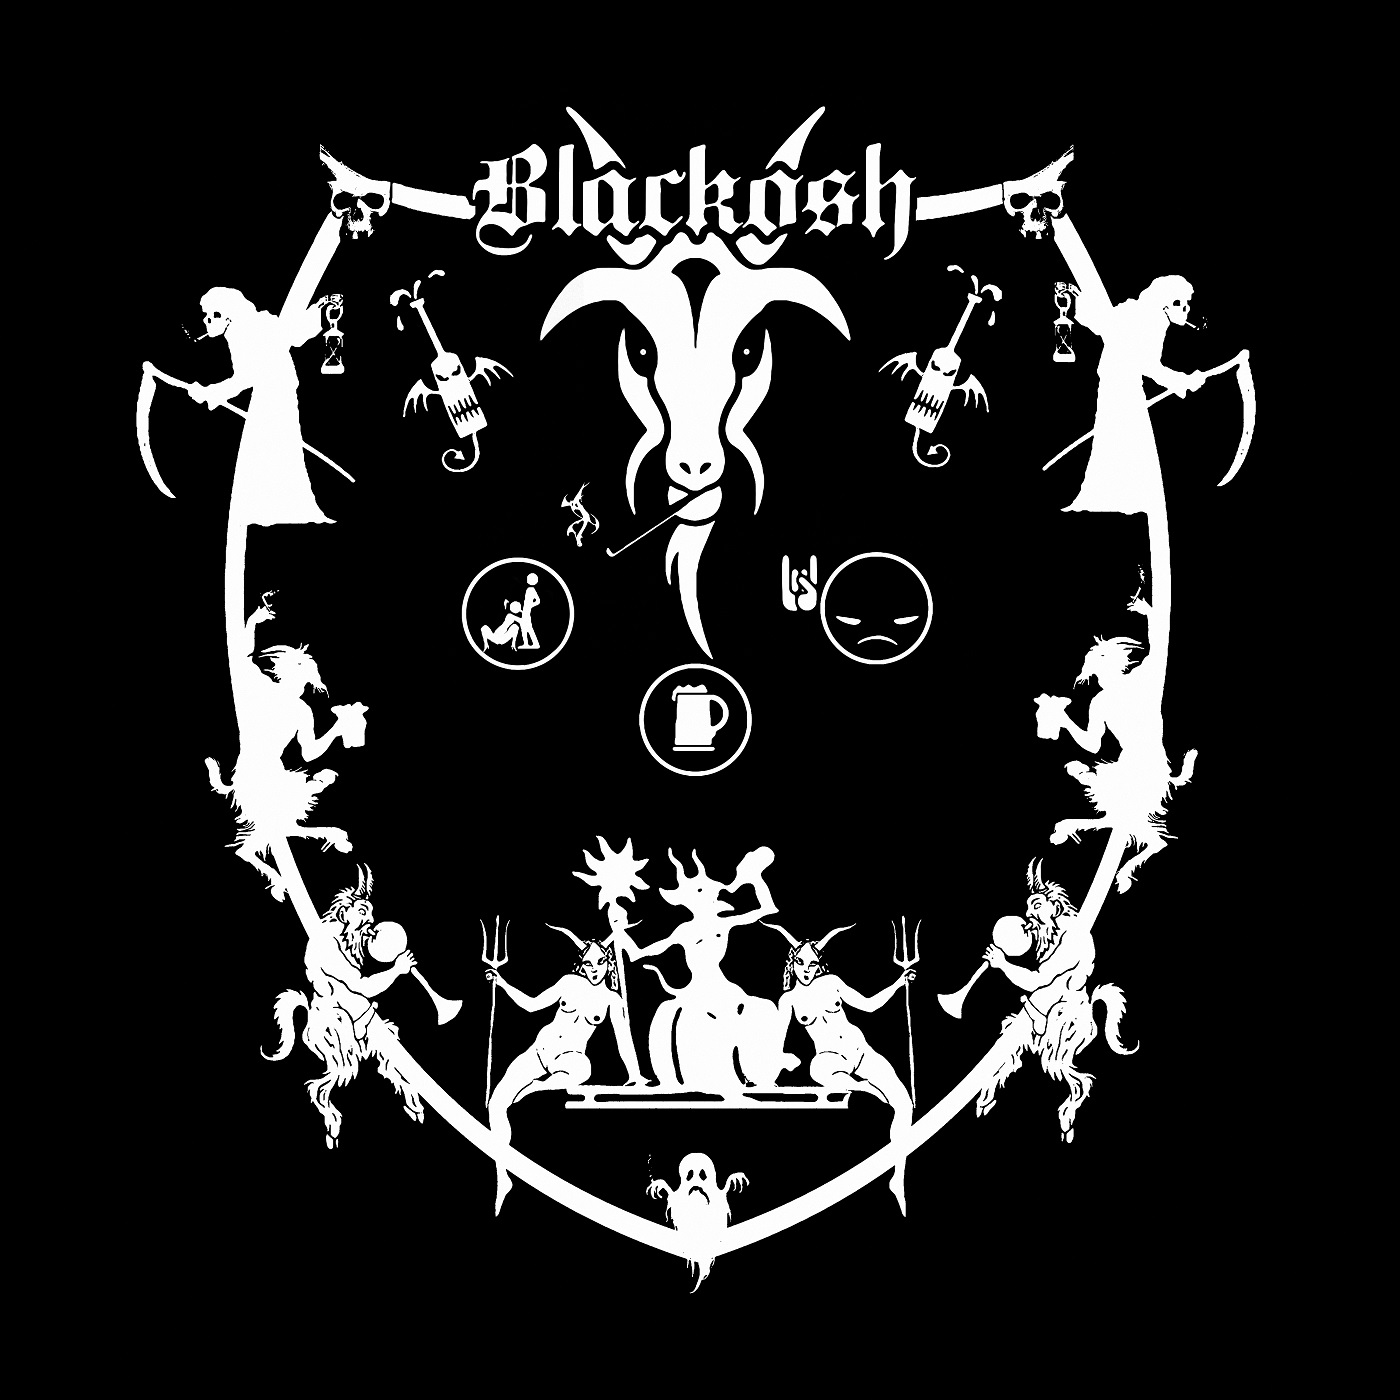 Blackosh – Whores, Booze & Black Metal Review